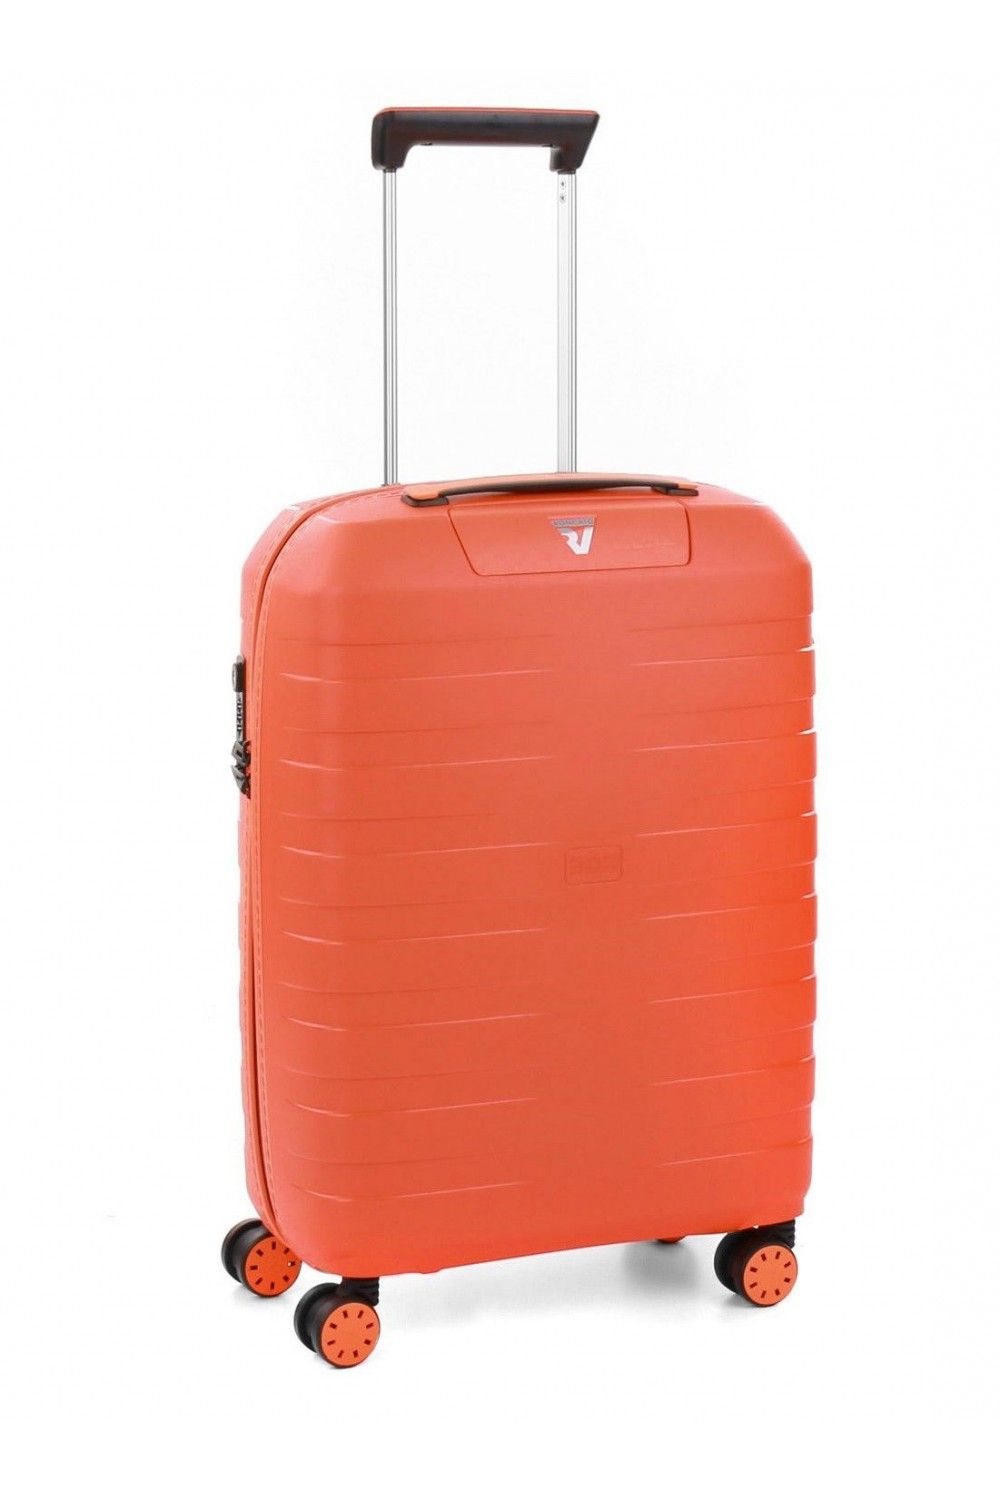 Hand luggage Roncato Box Young 55x40x20cm 4 wheels